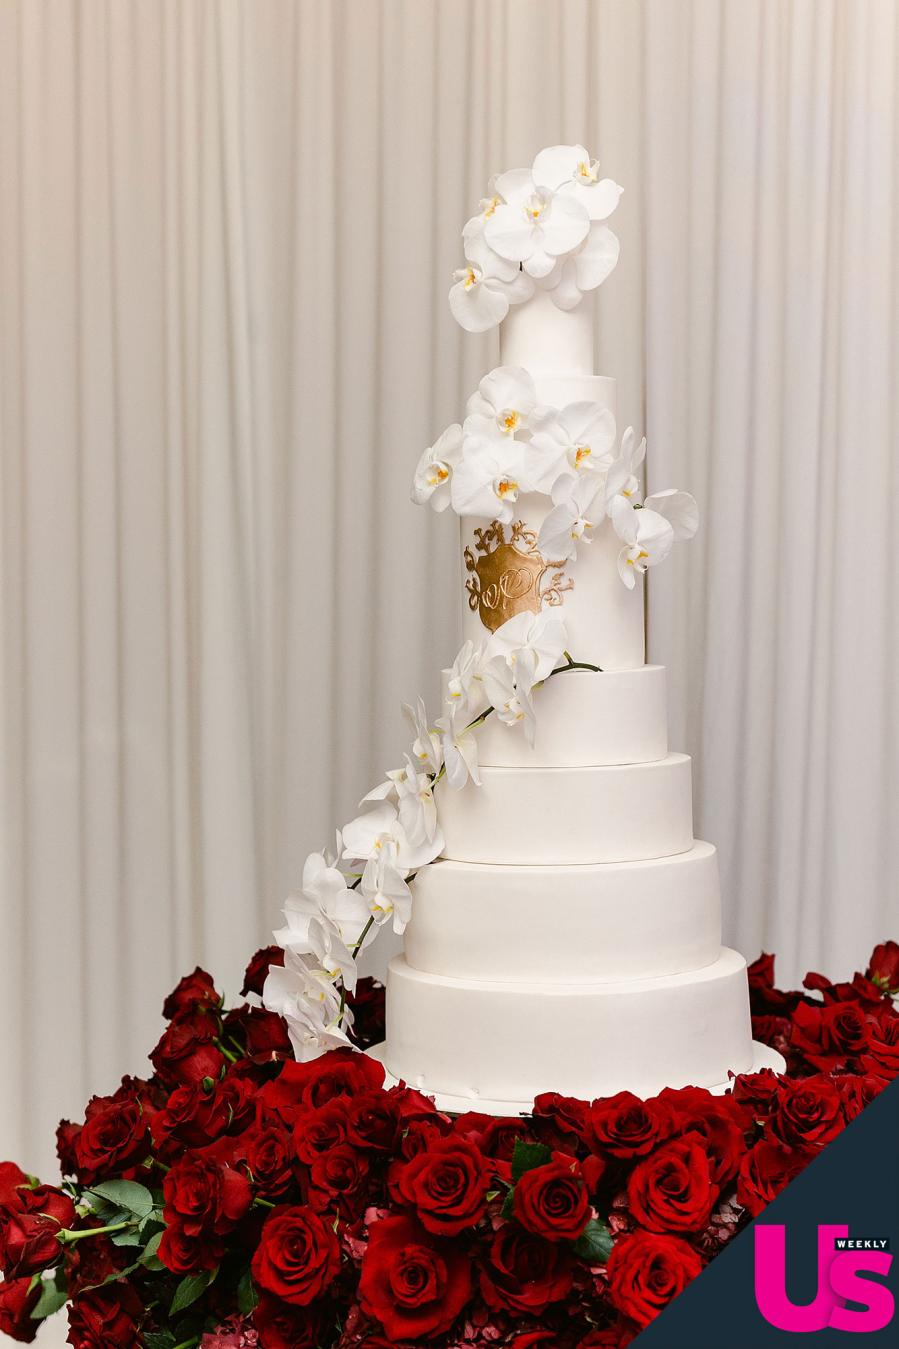 Cake The Challenge Zach Nichols and Jenna Compono Say Dream Wedding Was Worth the Wait